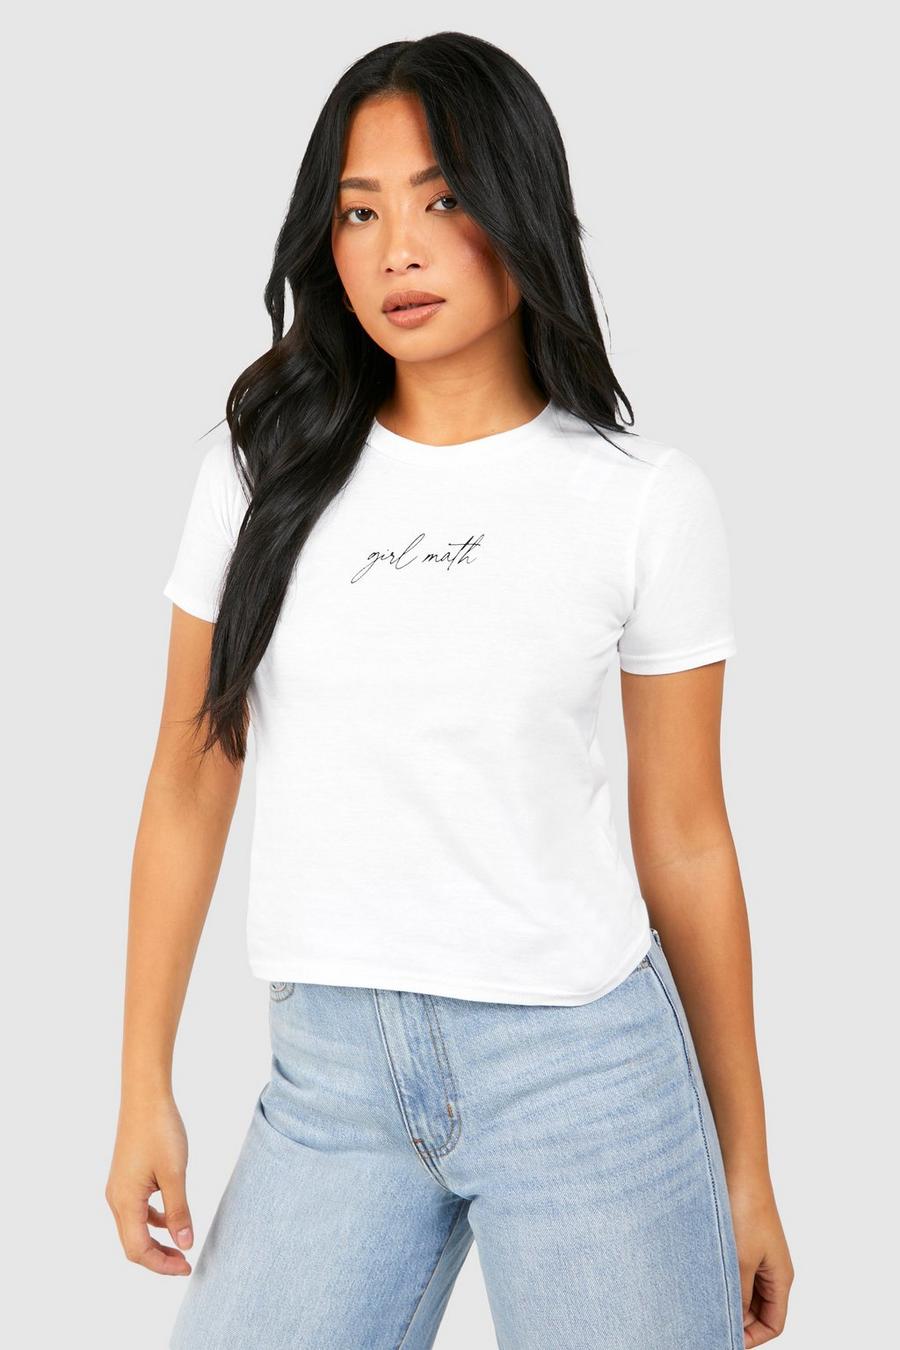 Camiseta Petite Girl Math Baby, White